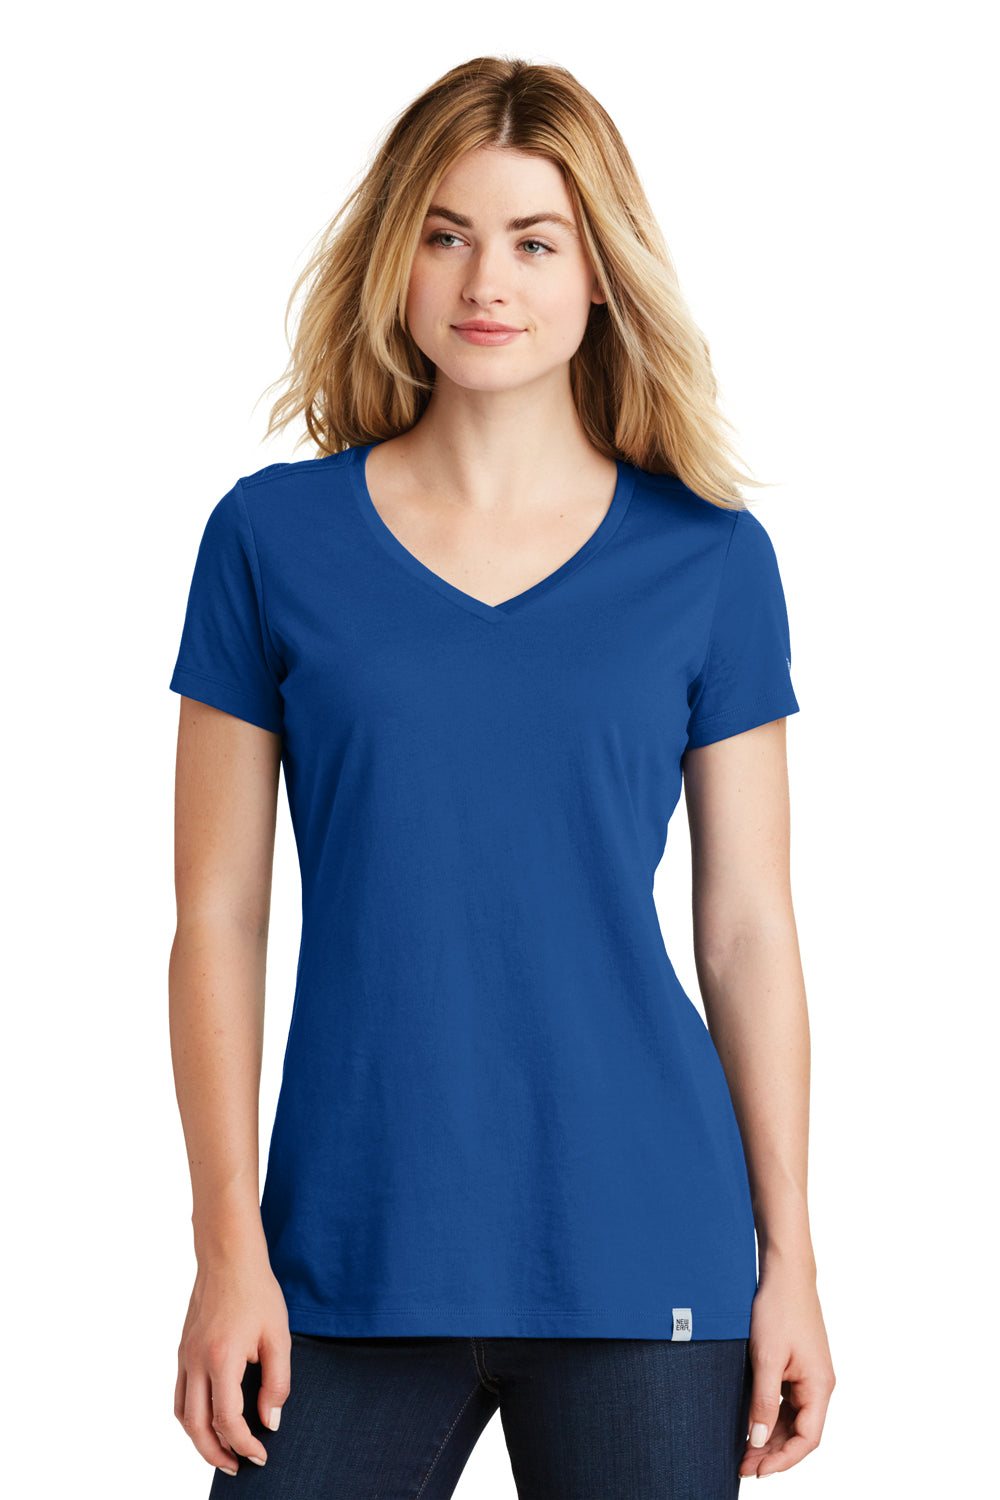 New Era LNEA101 Womens Heritage Short Sleeve V-Neck T-Shirt Royal Blue Front